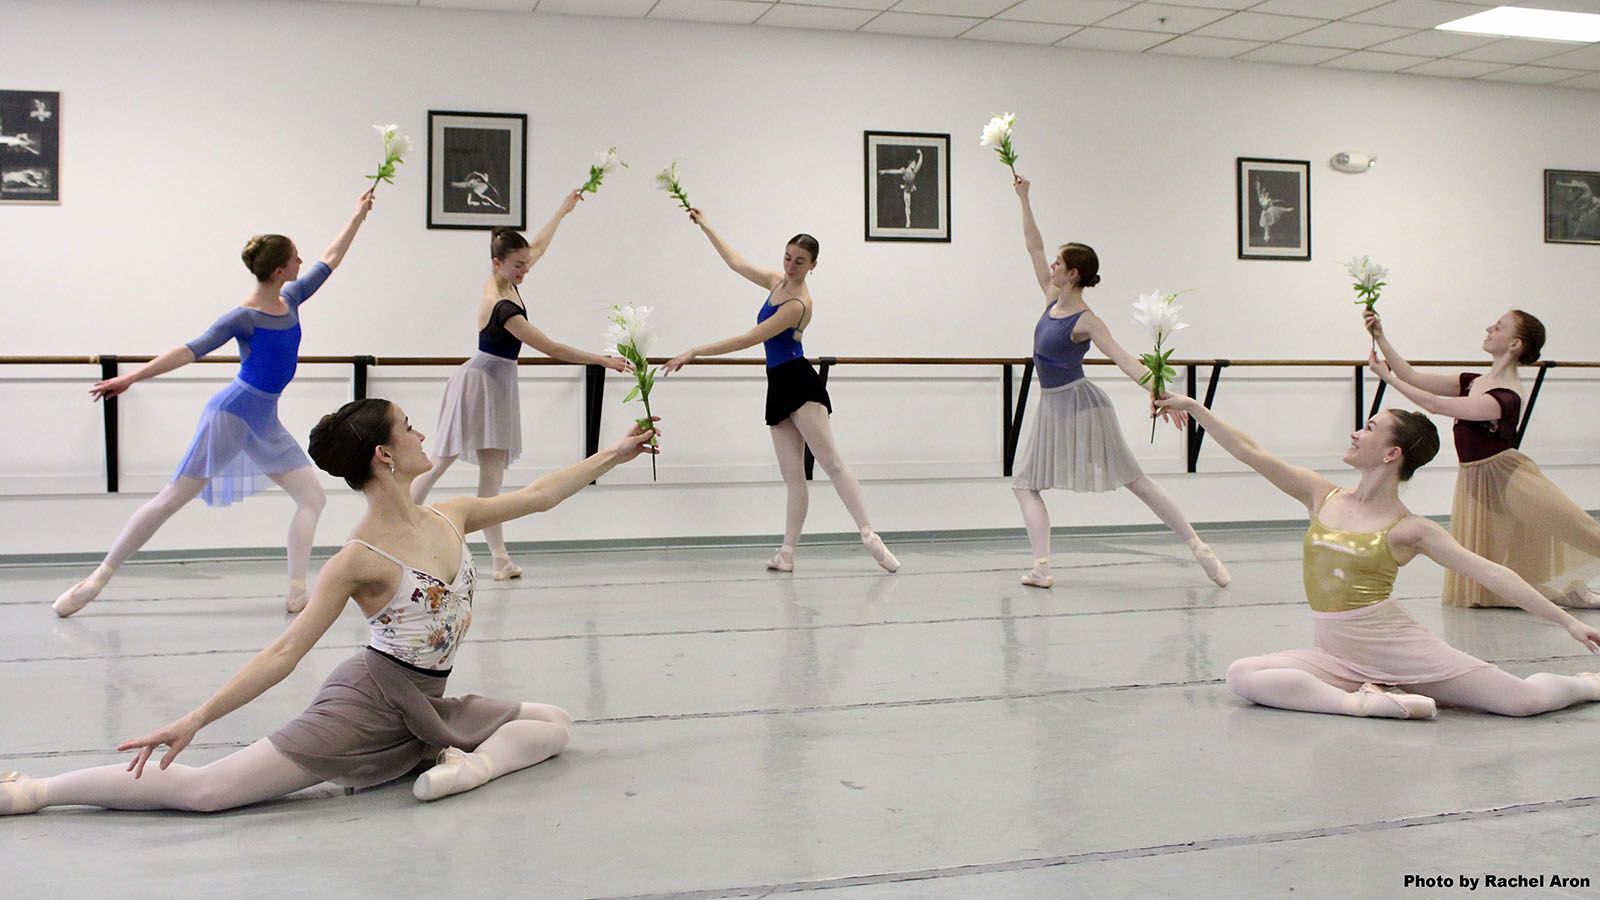 Fort Wayne Ballet will present "Romeo & Juliet" at Arts United Center, April 19-21.